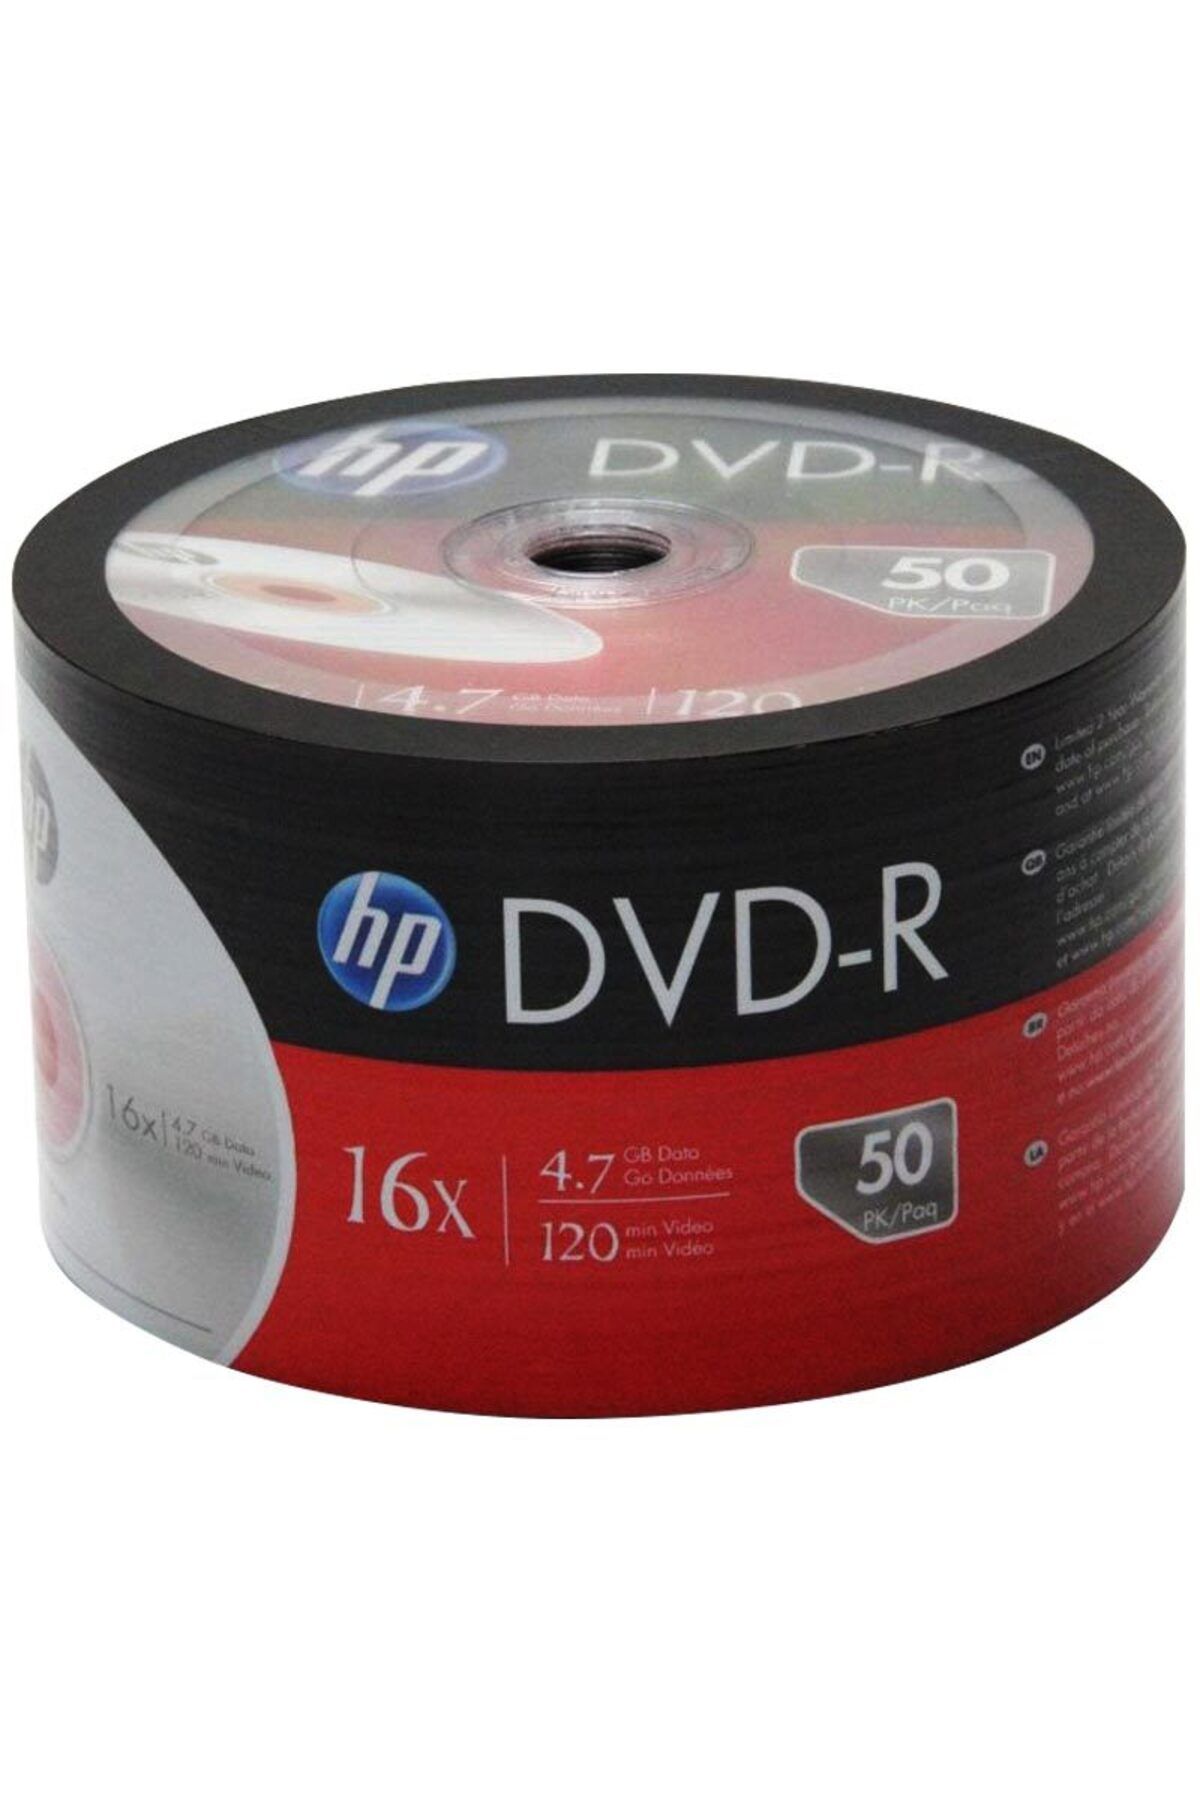 MELFSHOP HP DME00070-3 DVD-R 4.7 GB 120 MİN 16X 50Lİ PAKET FİYAT (81)